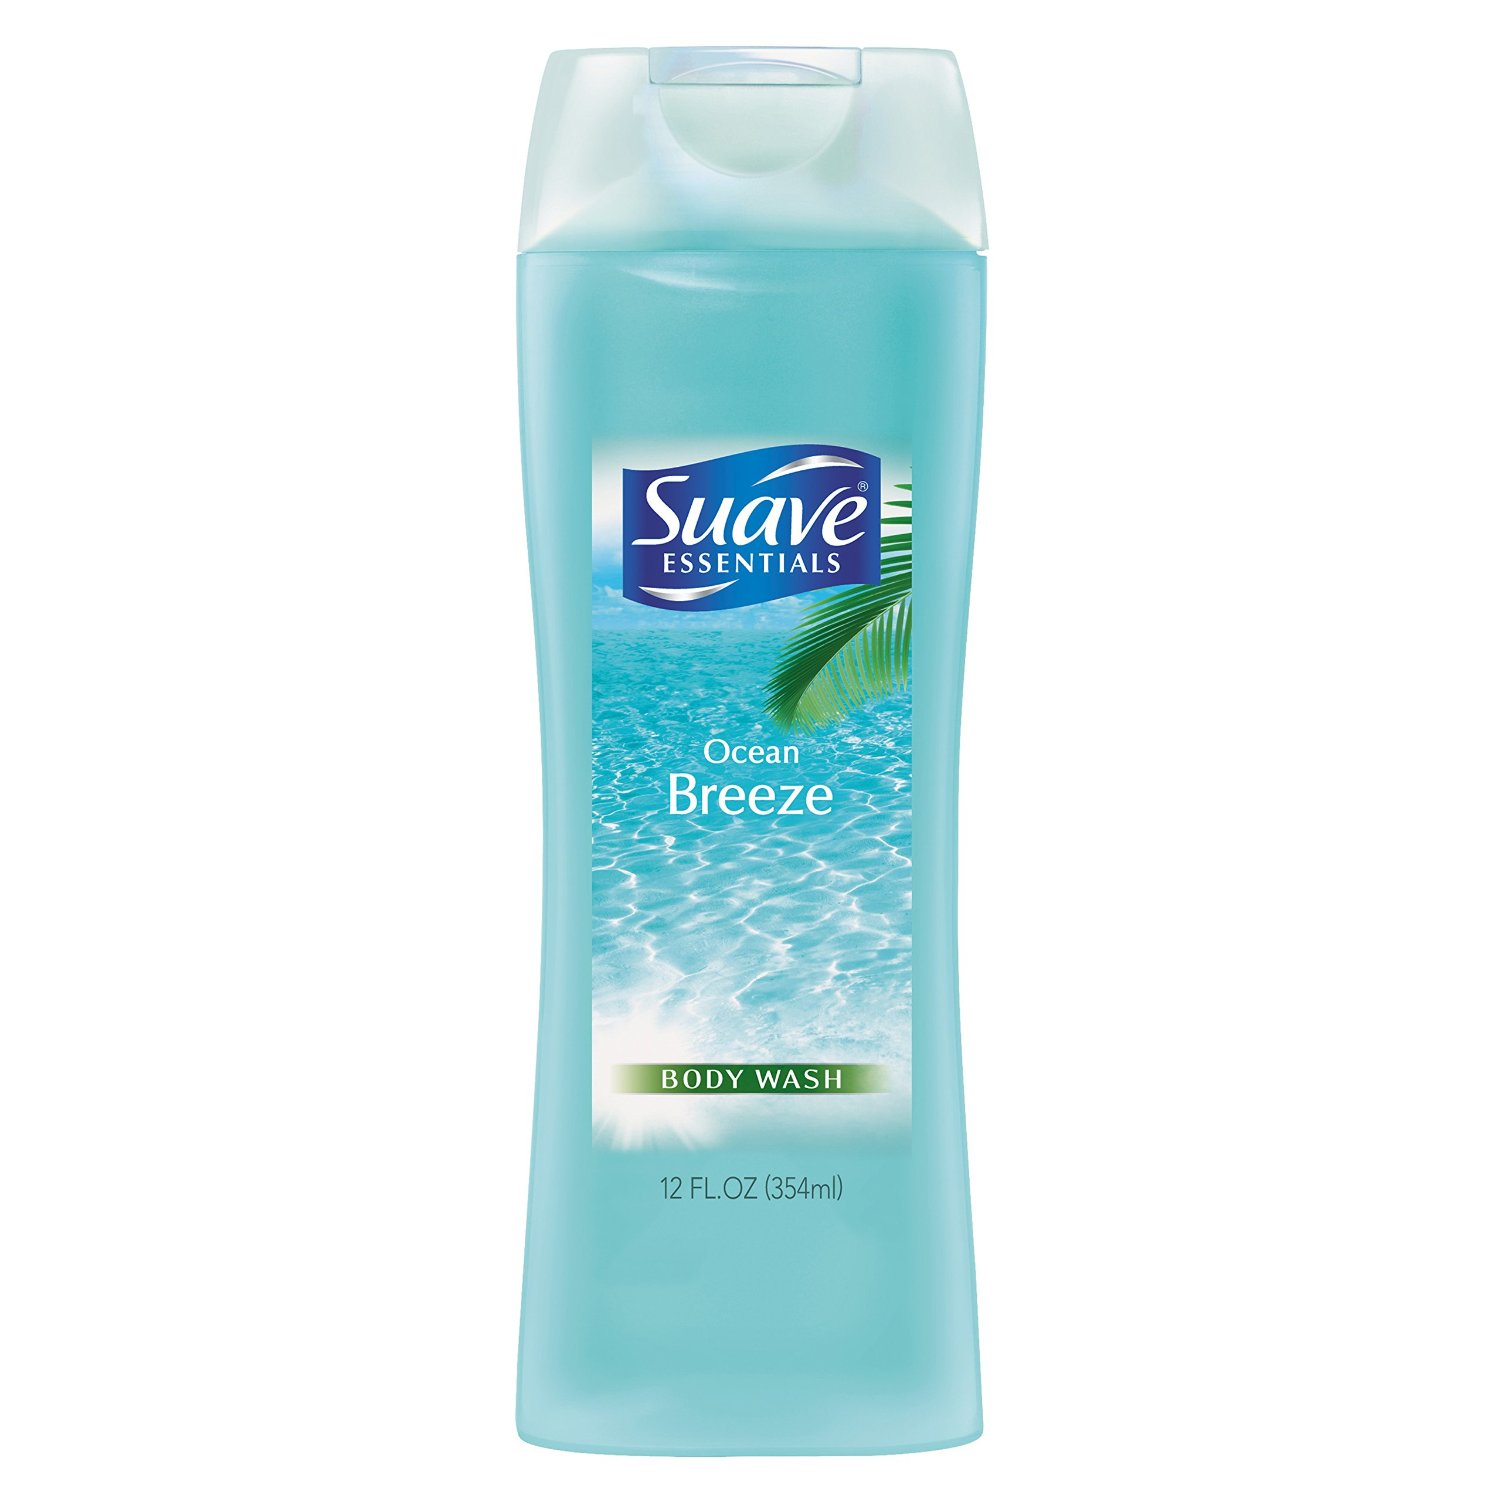 Suave Essentials Body Wash, Ocean Breeze product image